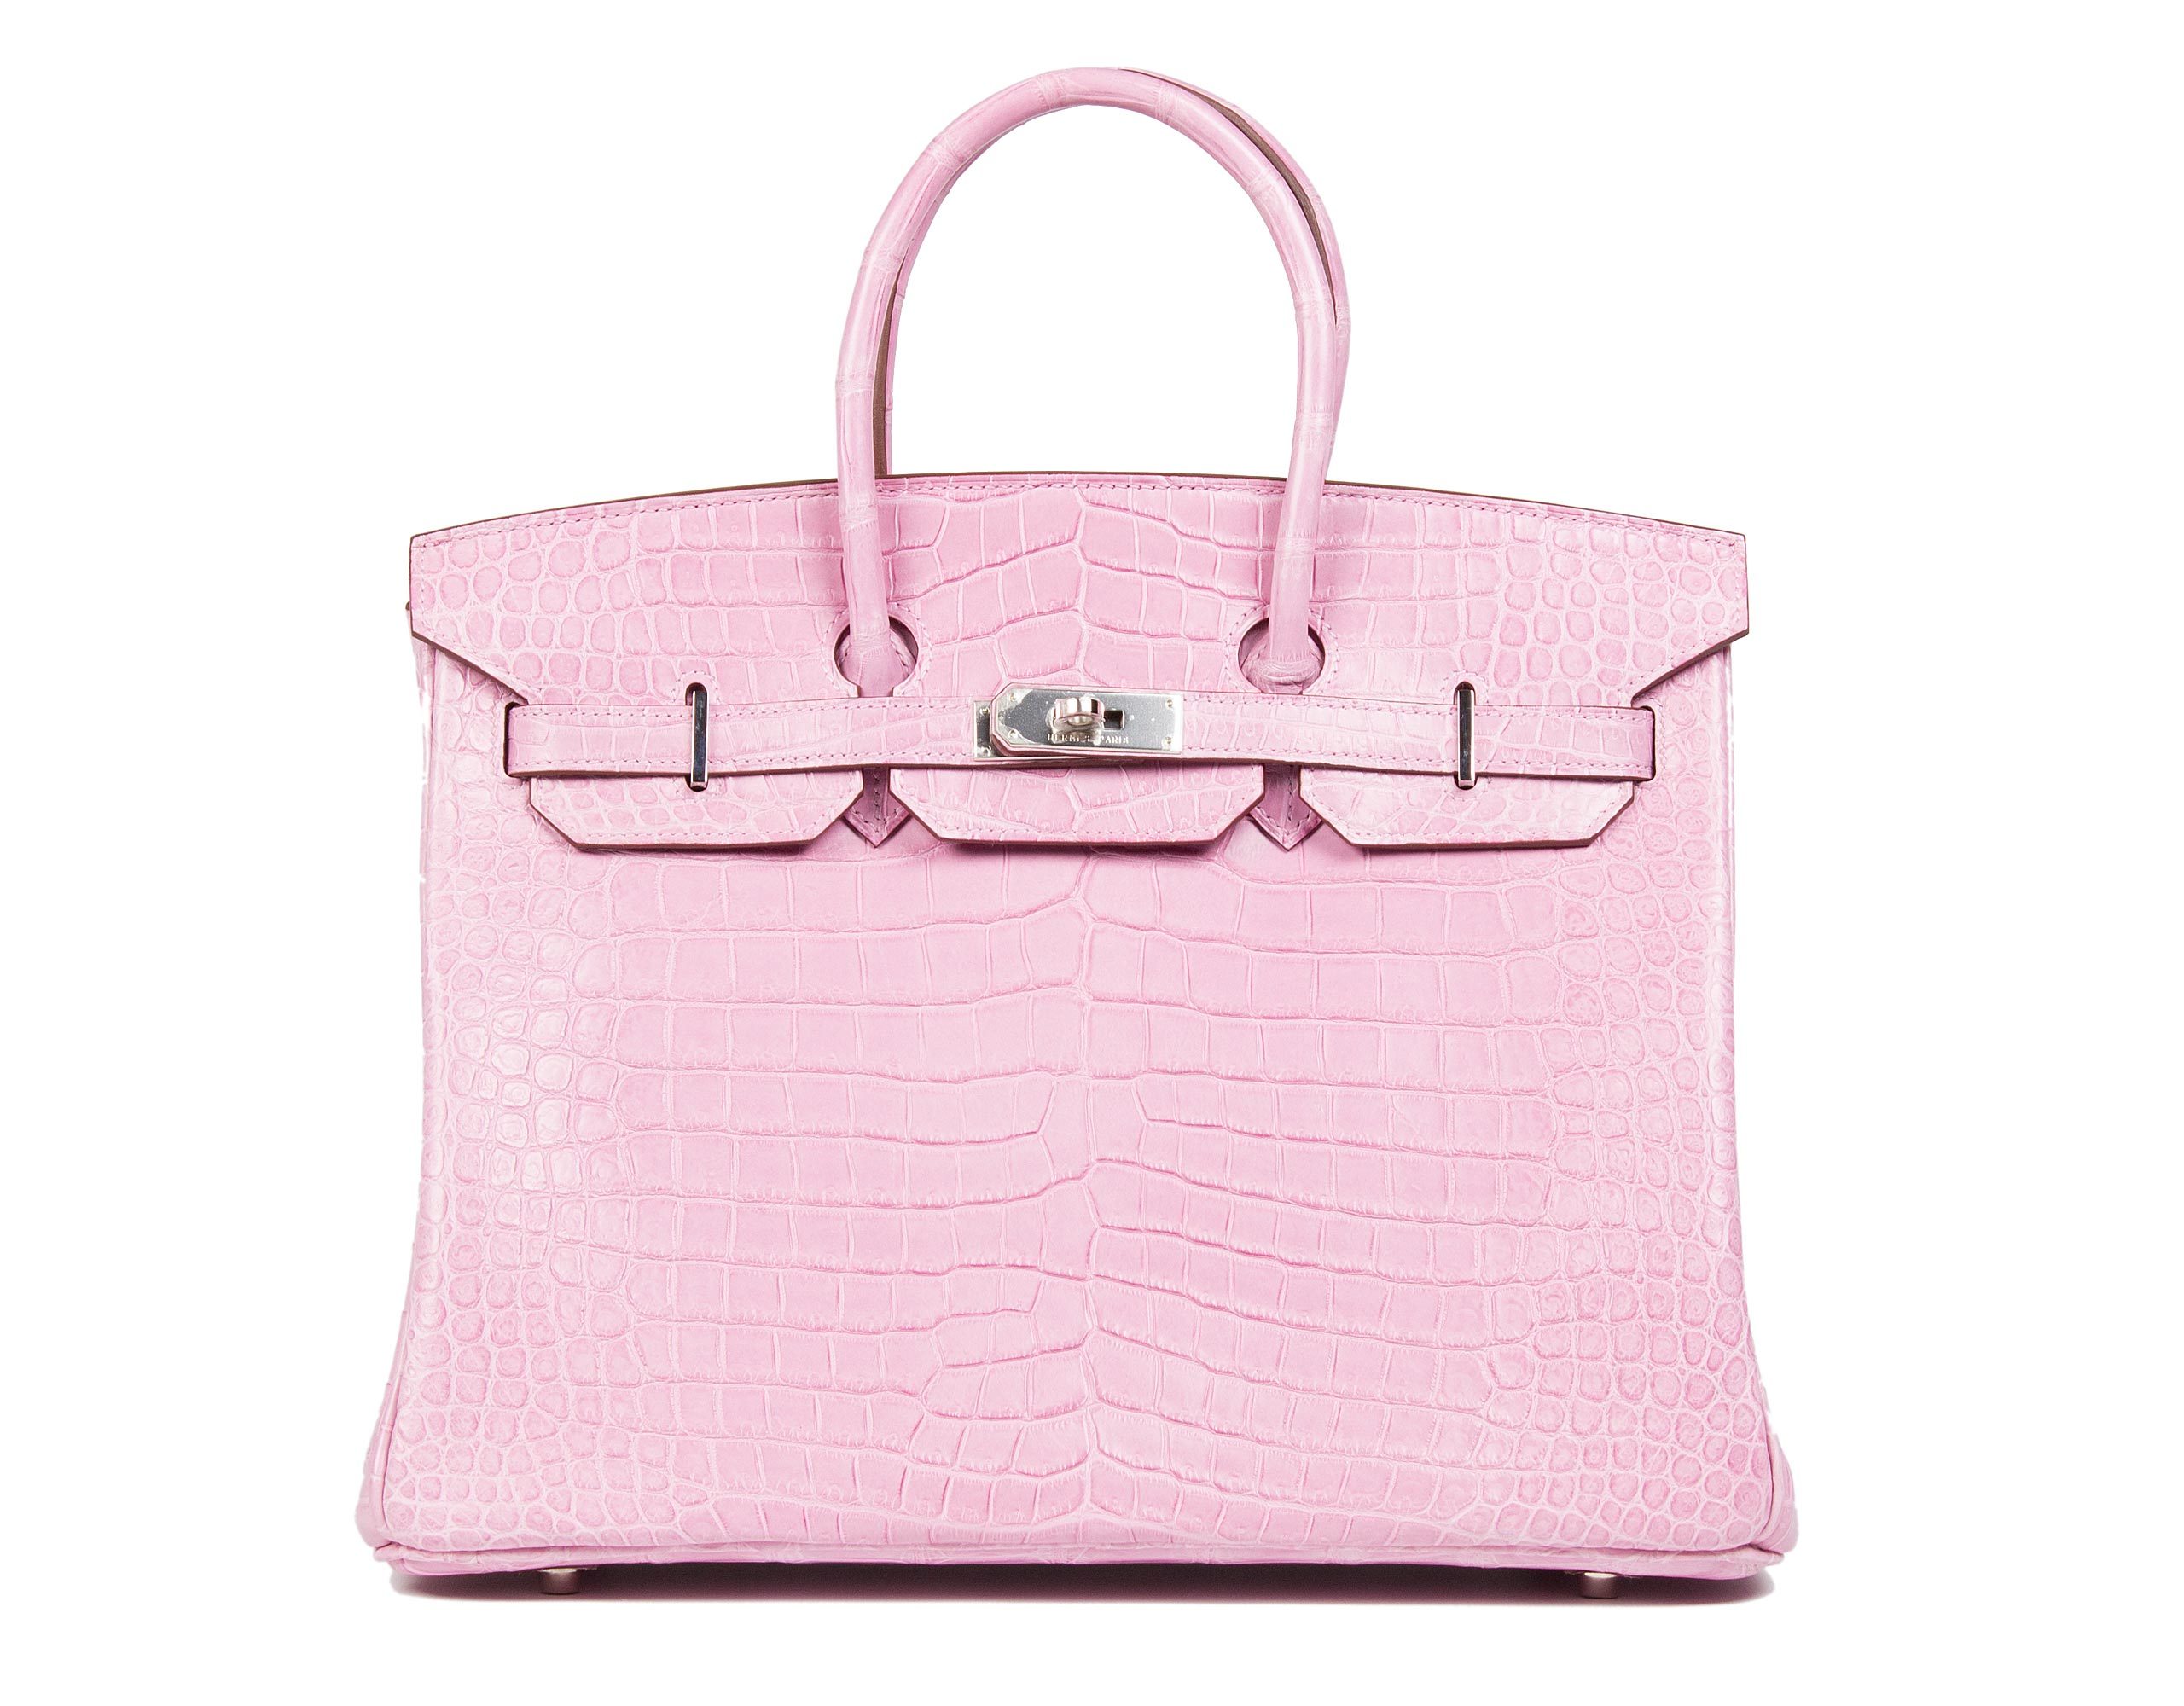 Jane Birkin wants Hermès to stop using her name for Birkin bag